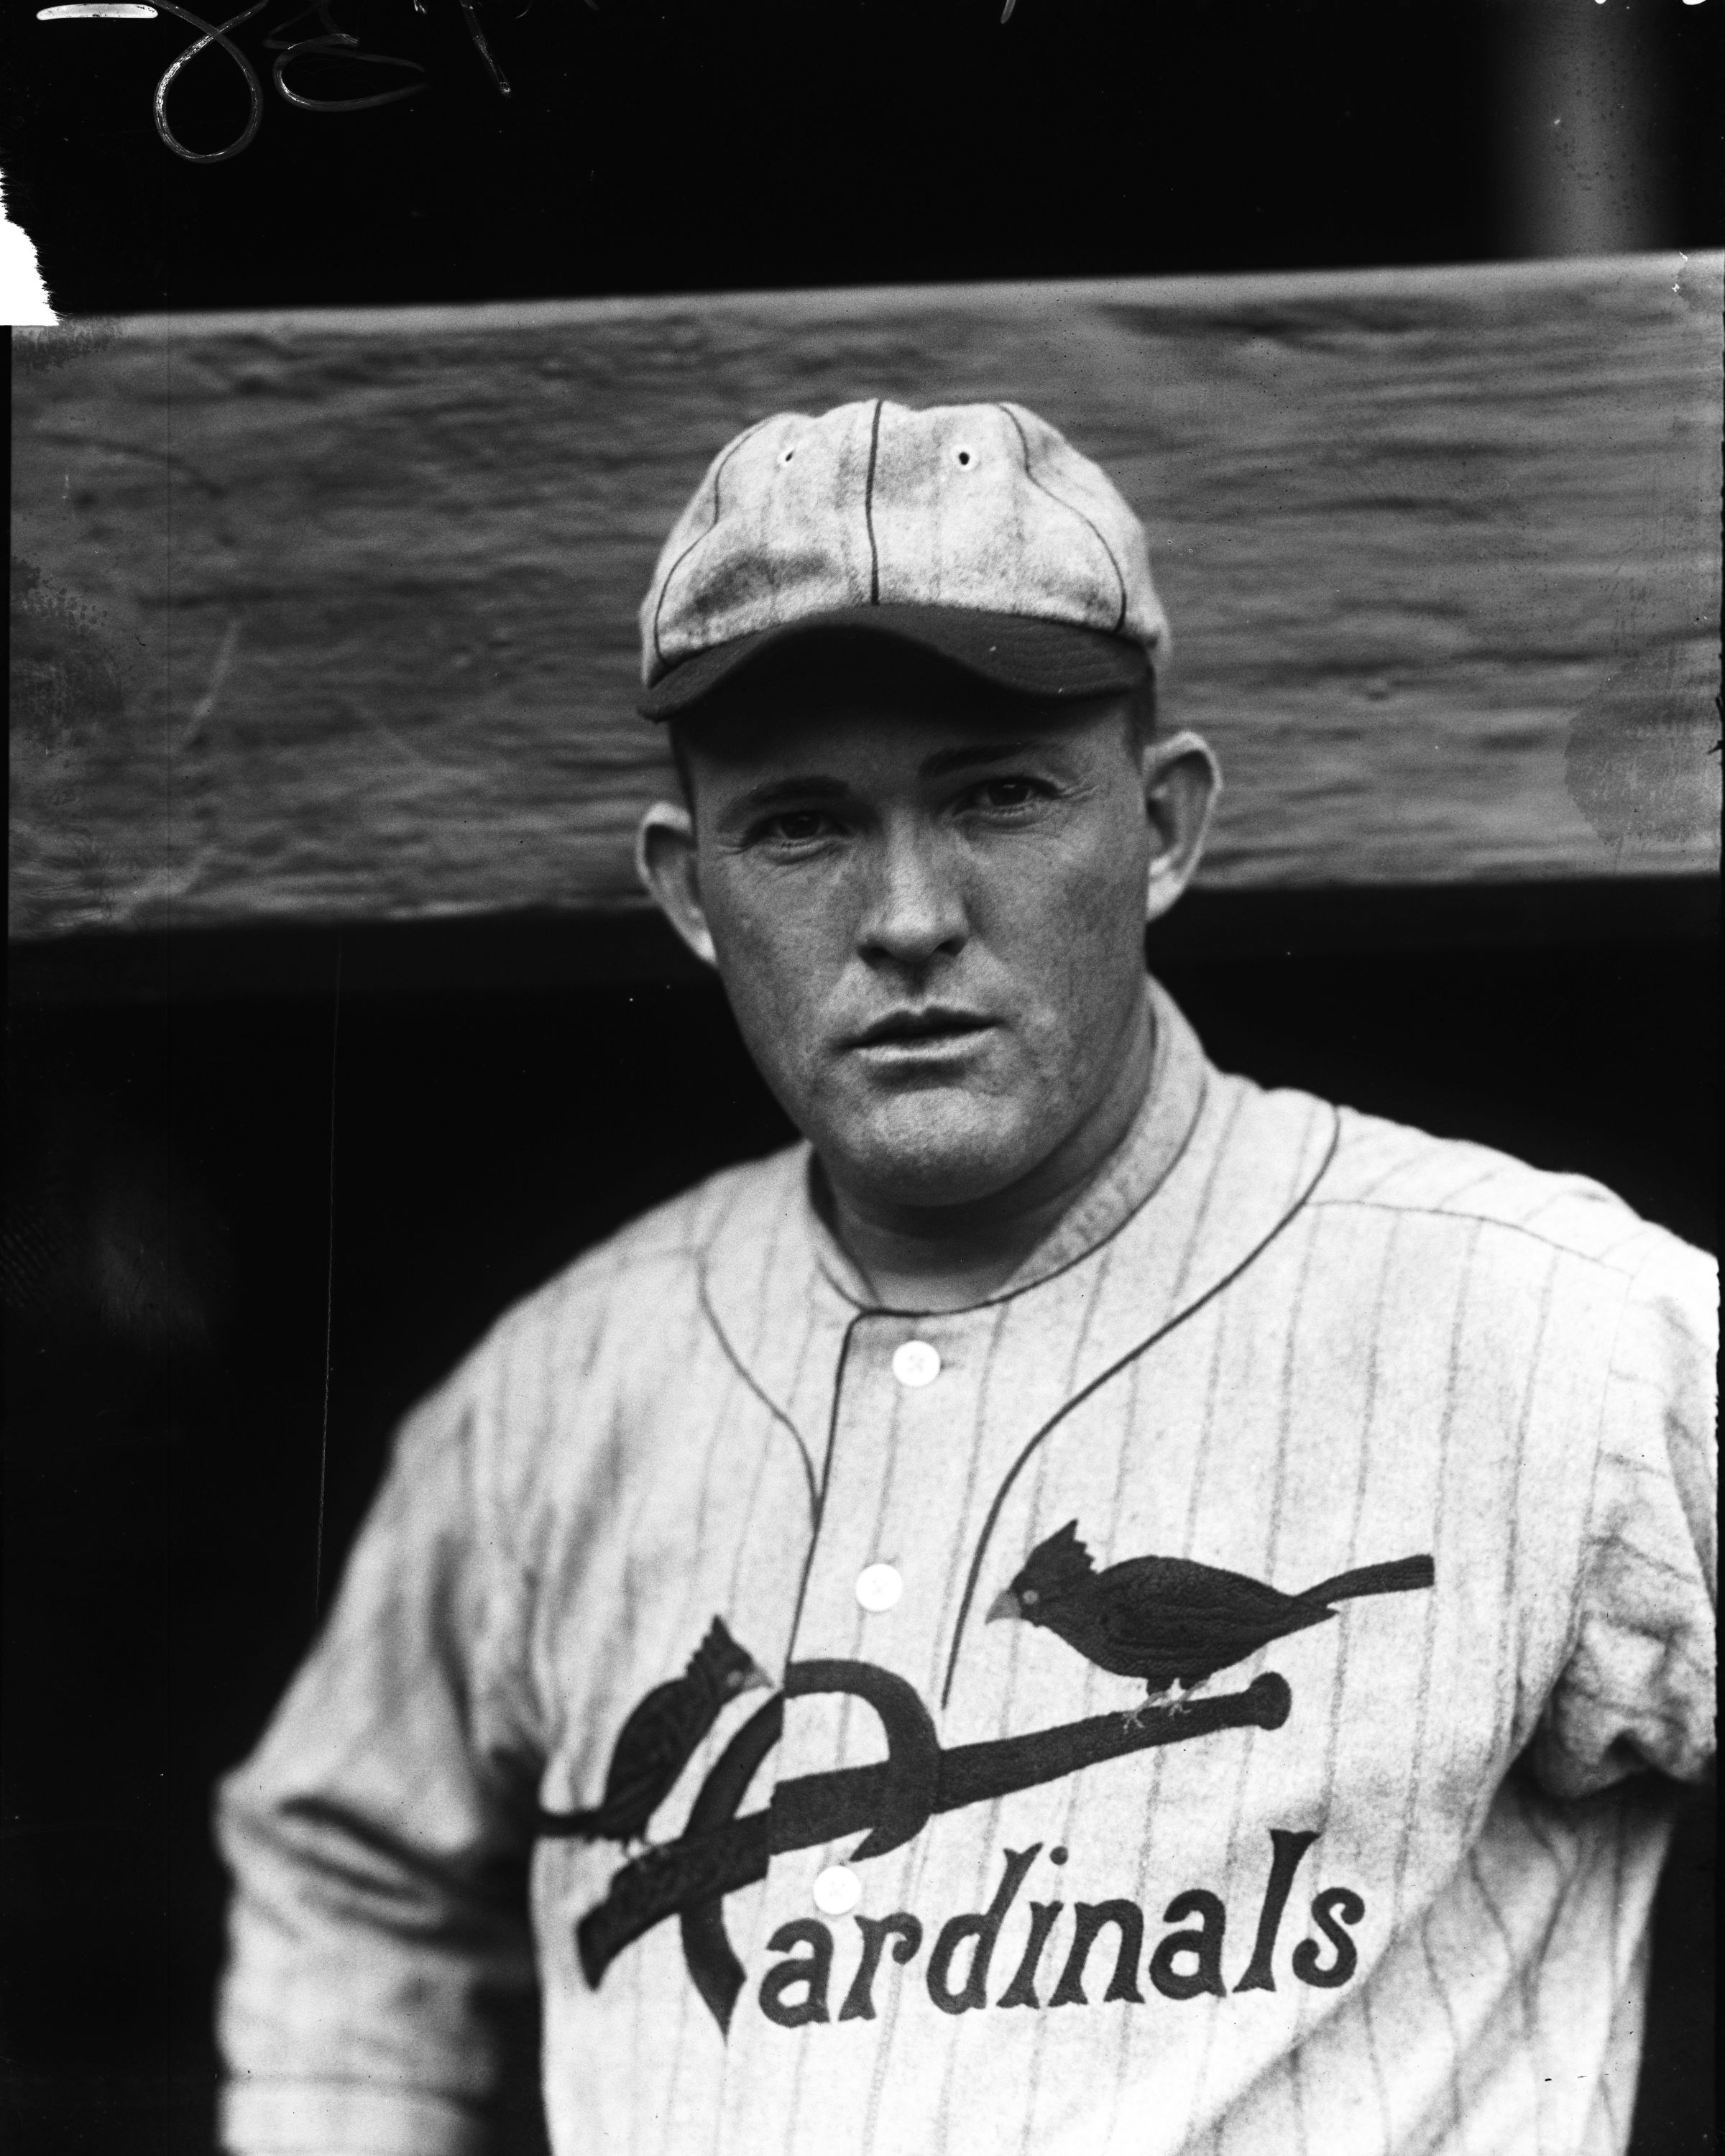 Rogers Hornsby 1920s Cardinals uniform